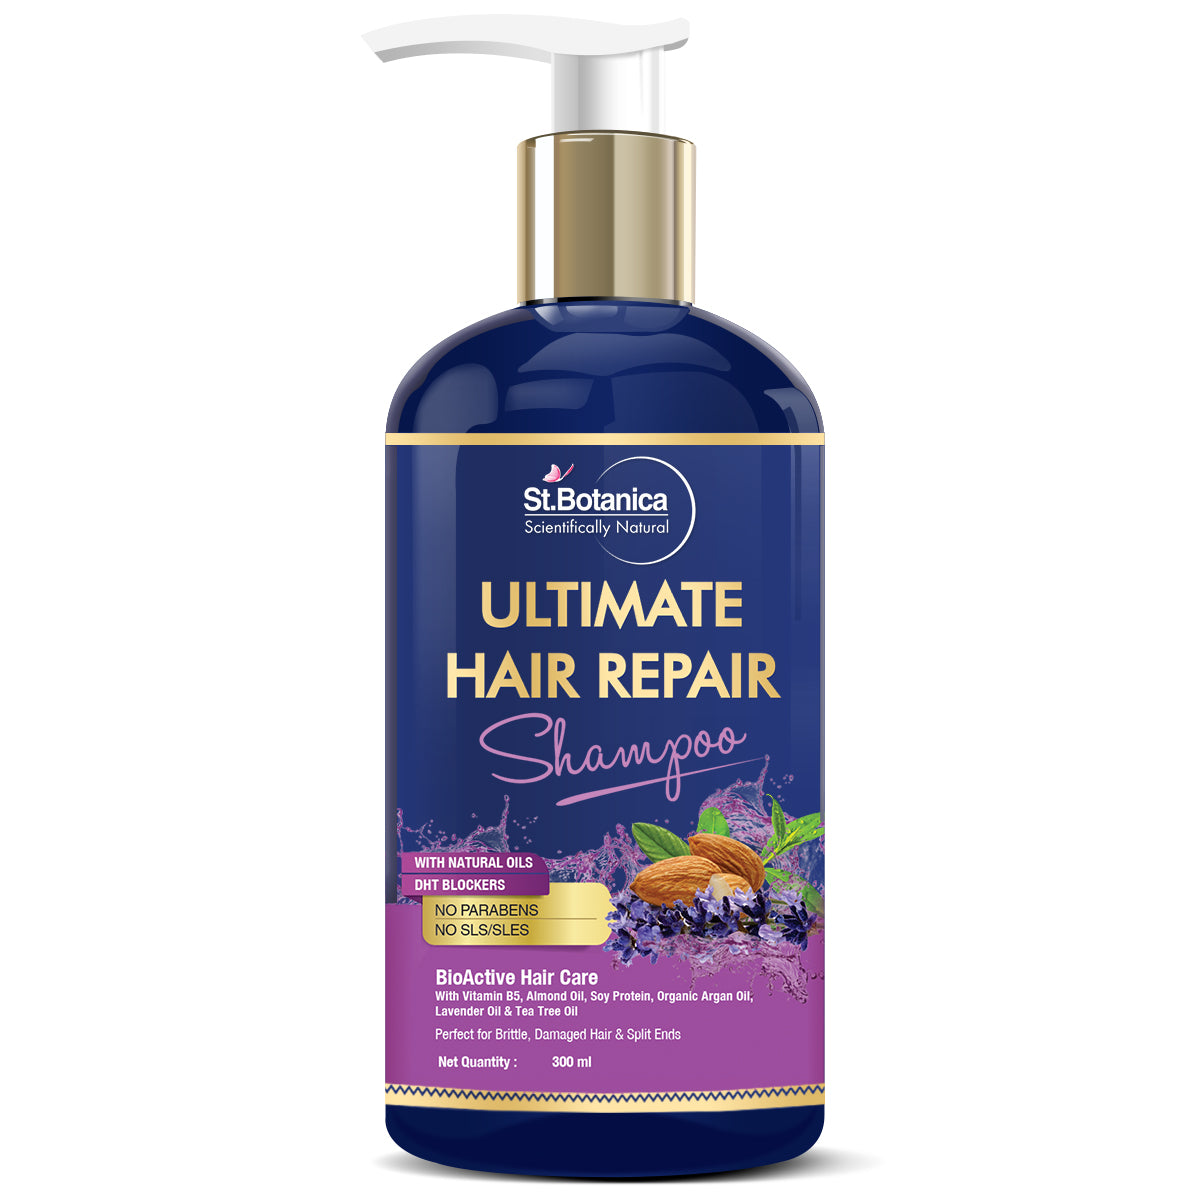 St.Botanica Ultimate Hair Repair Shampoo, No Sls/Sulphate, Paraben or Silicon - With Vitamin B3, B5, Organic Argan Oil, Almond Oil, Saw Palmetto, Coconut Oil, 300 ml